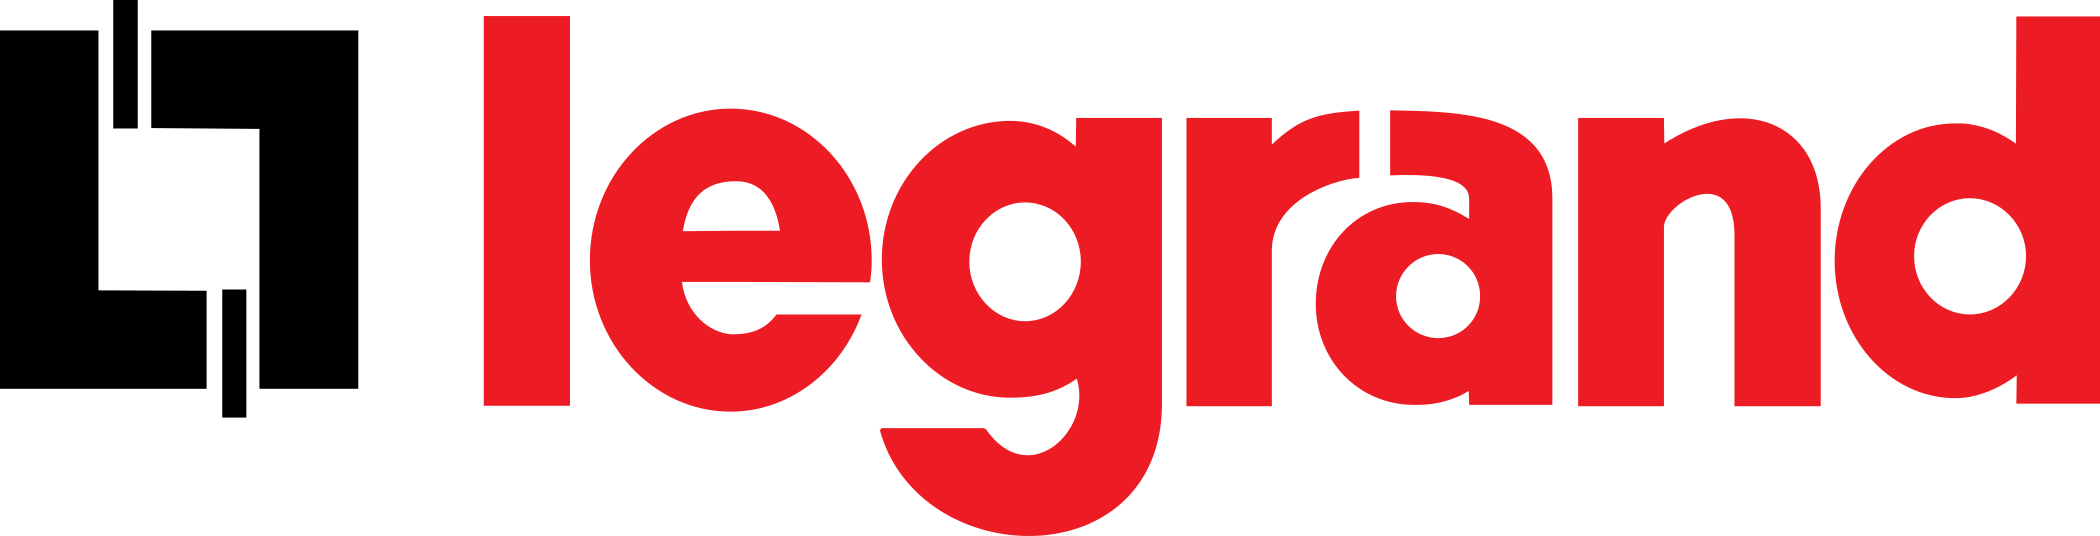 legrand logo 1 - Legrand Logo